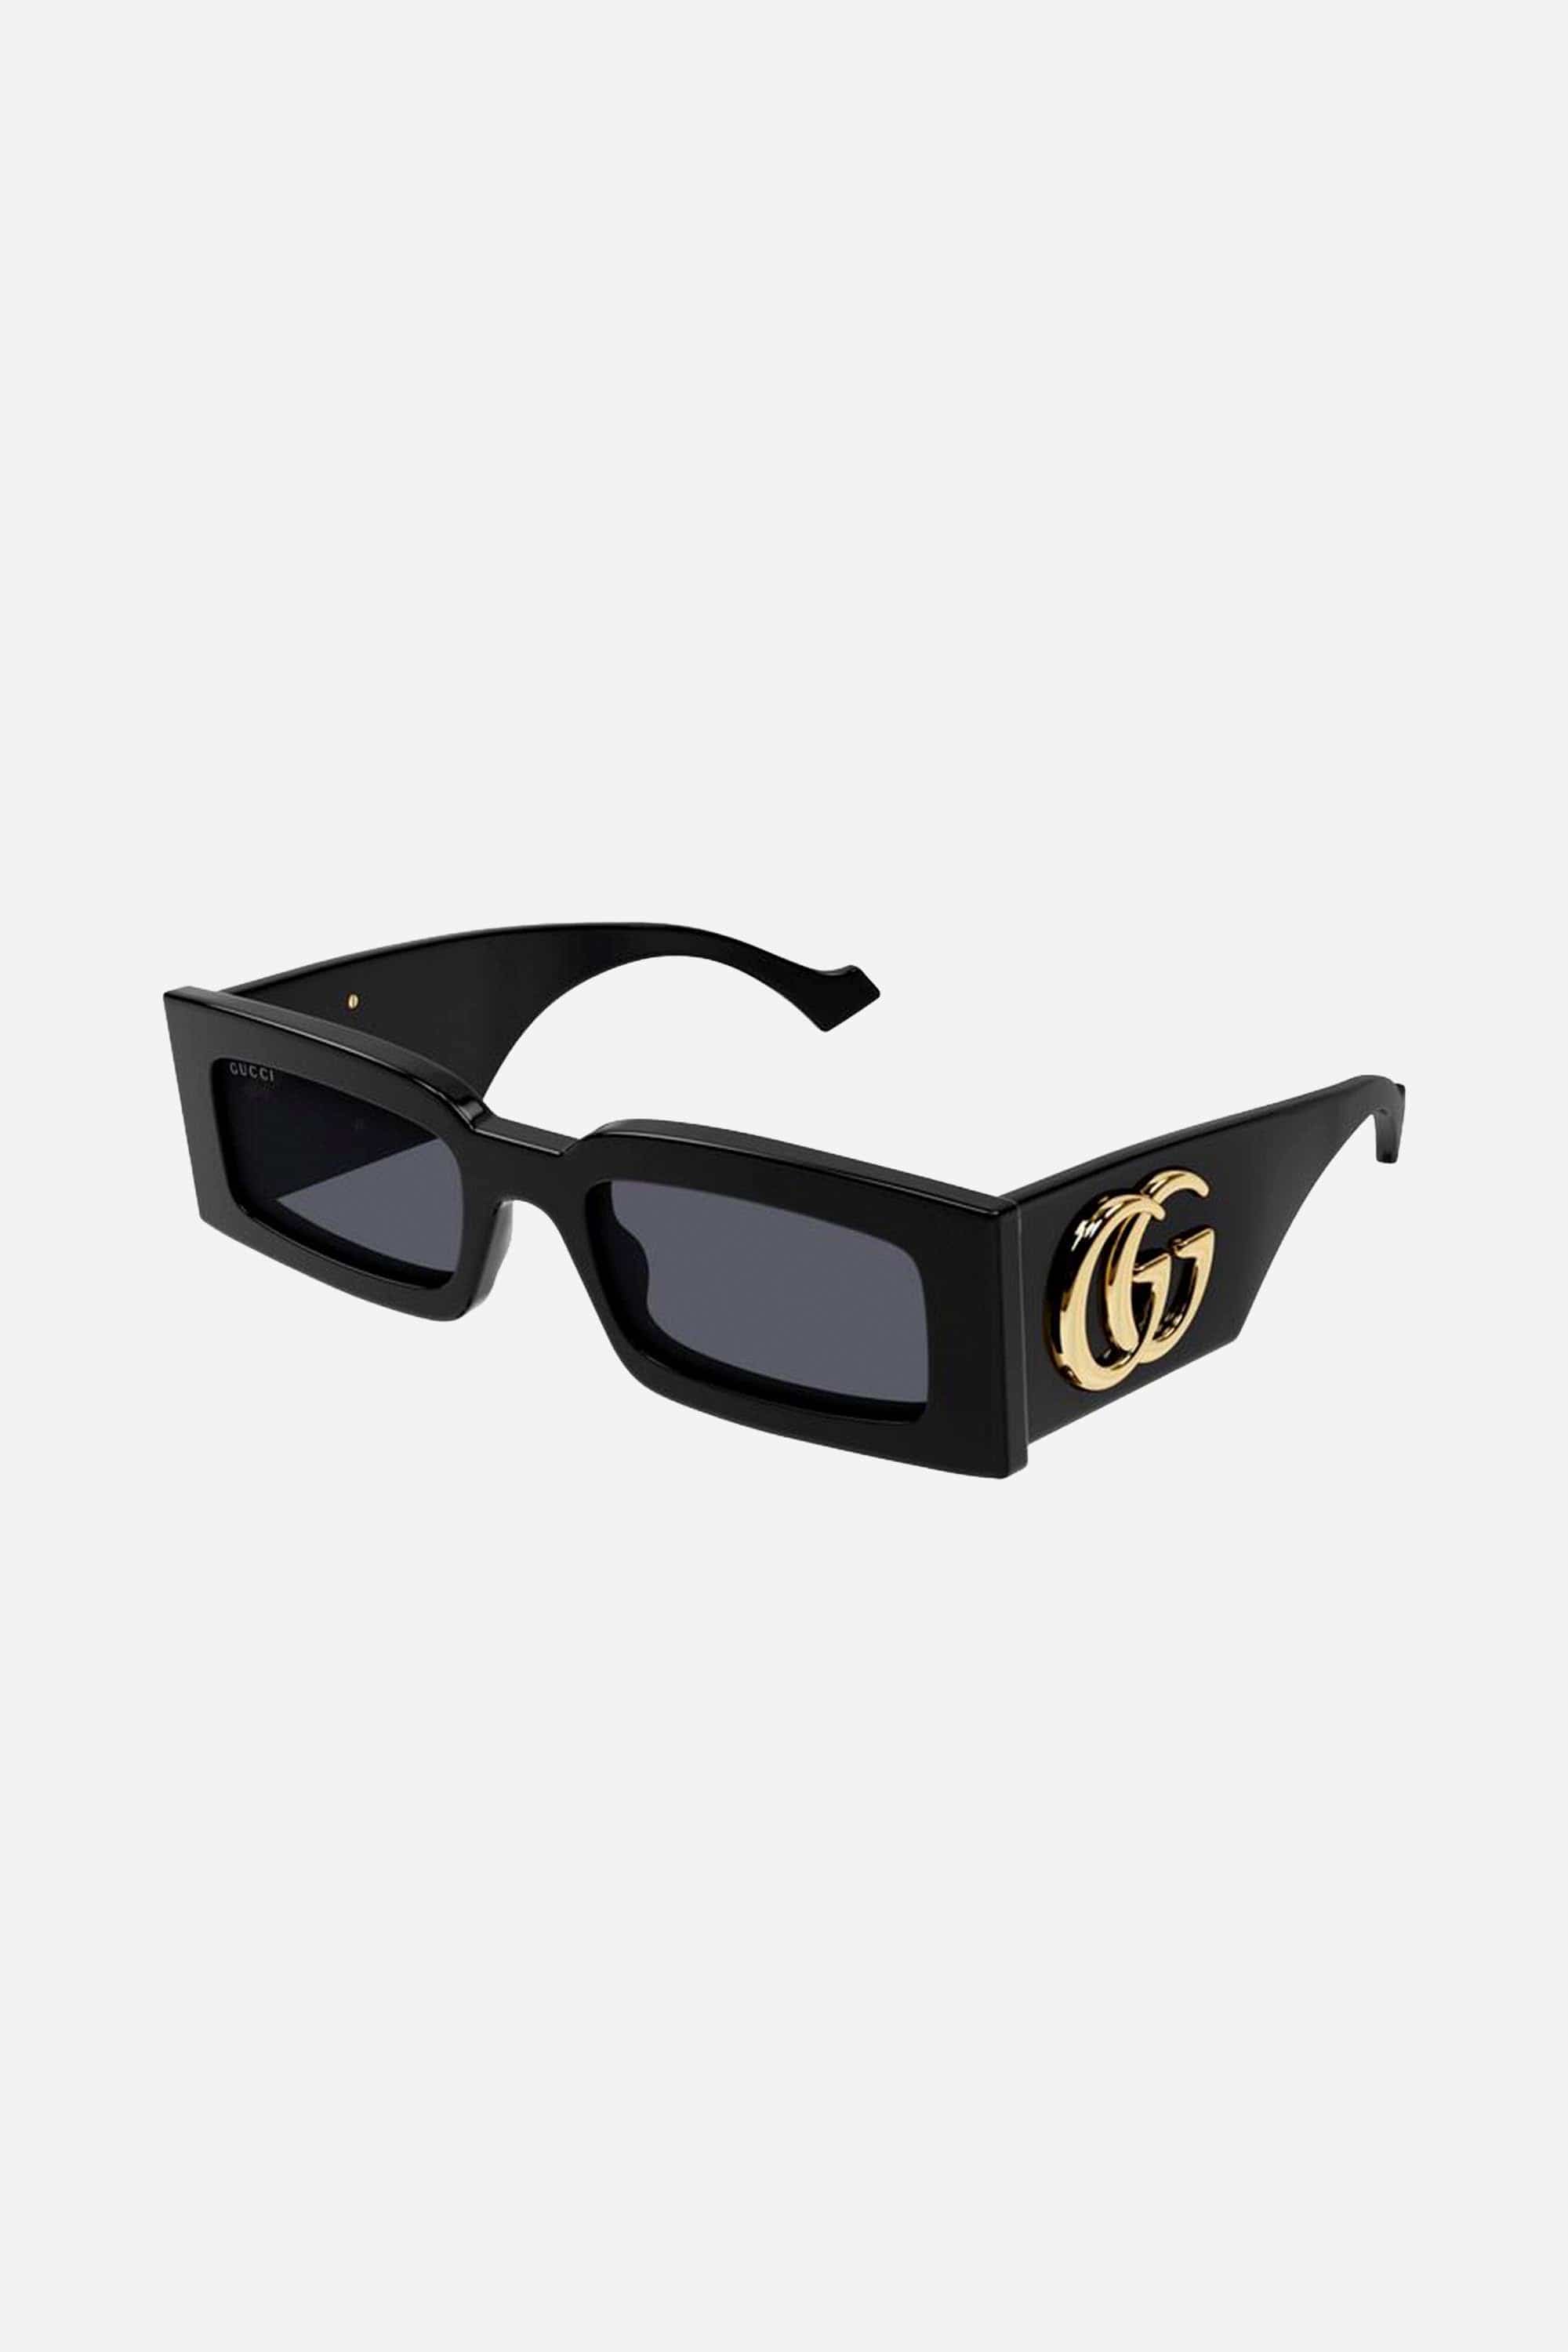 Gucci black rectangular sunglasses - Eyewear Club